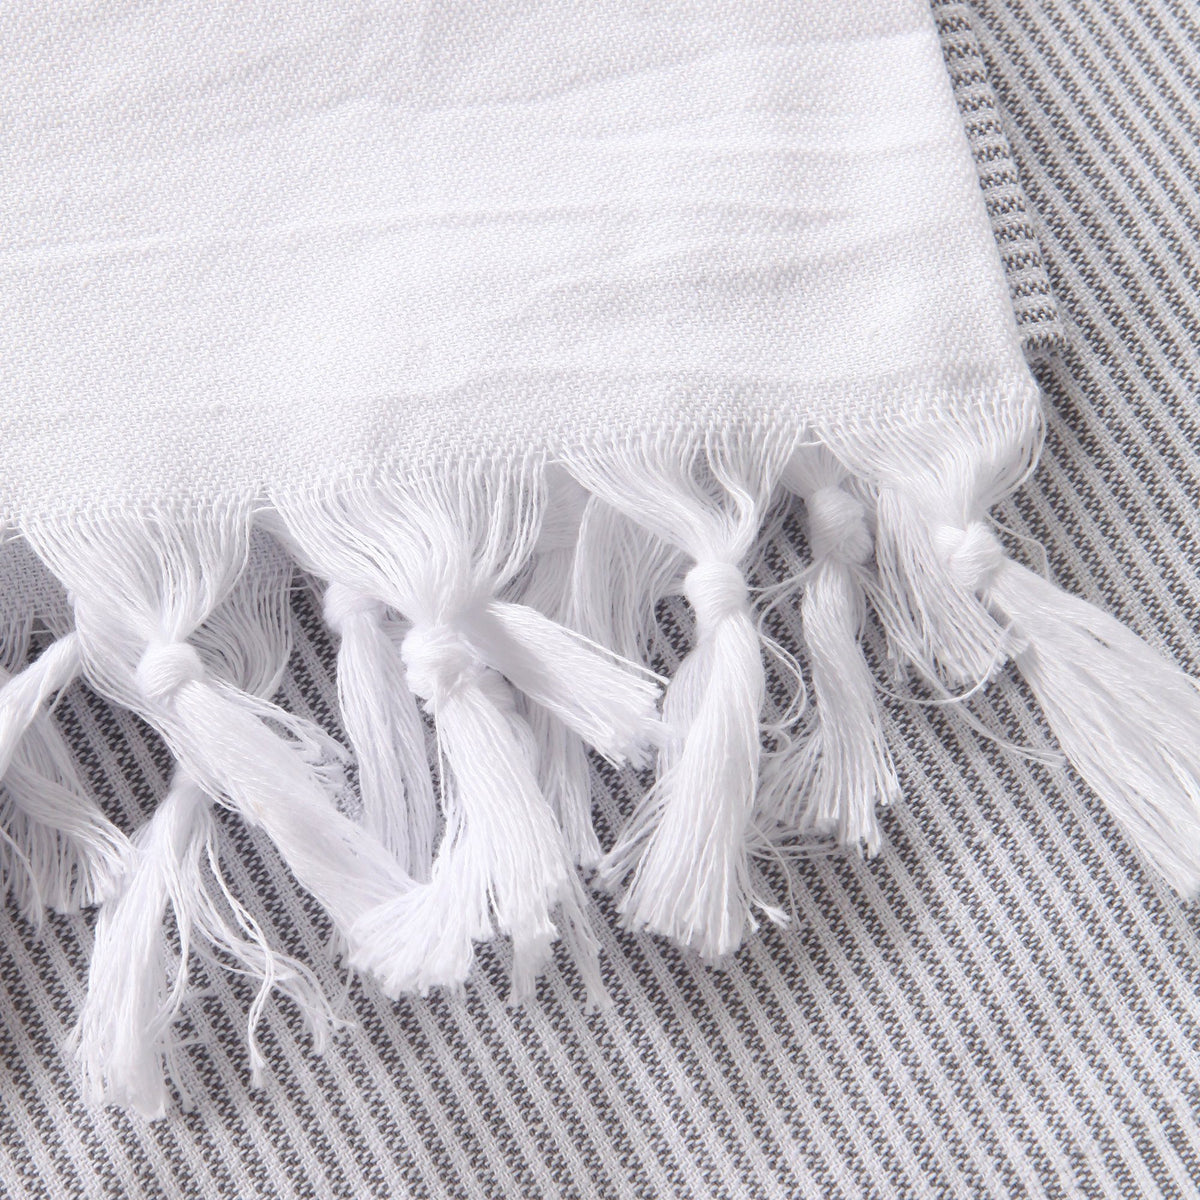 Mini Stripes Didyma Turkish Hand / Kitchen Towel